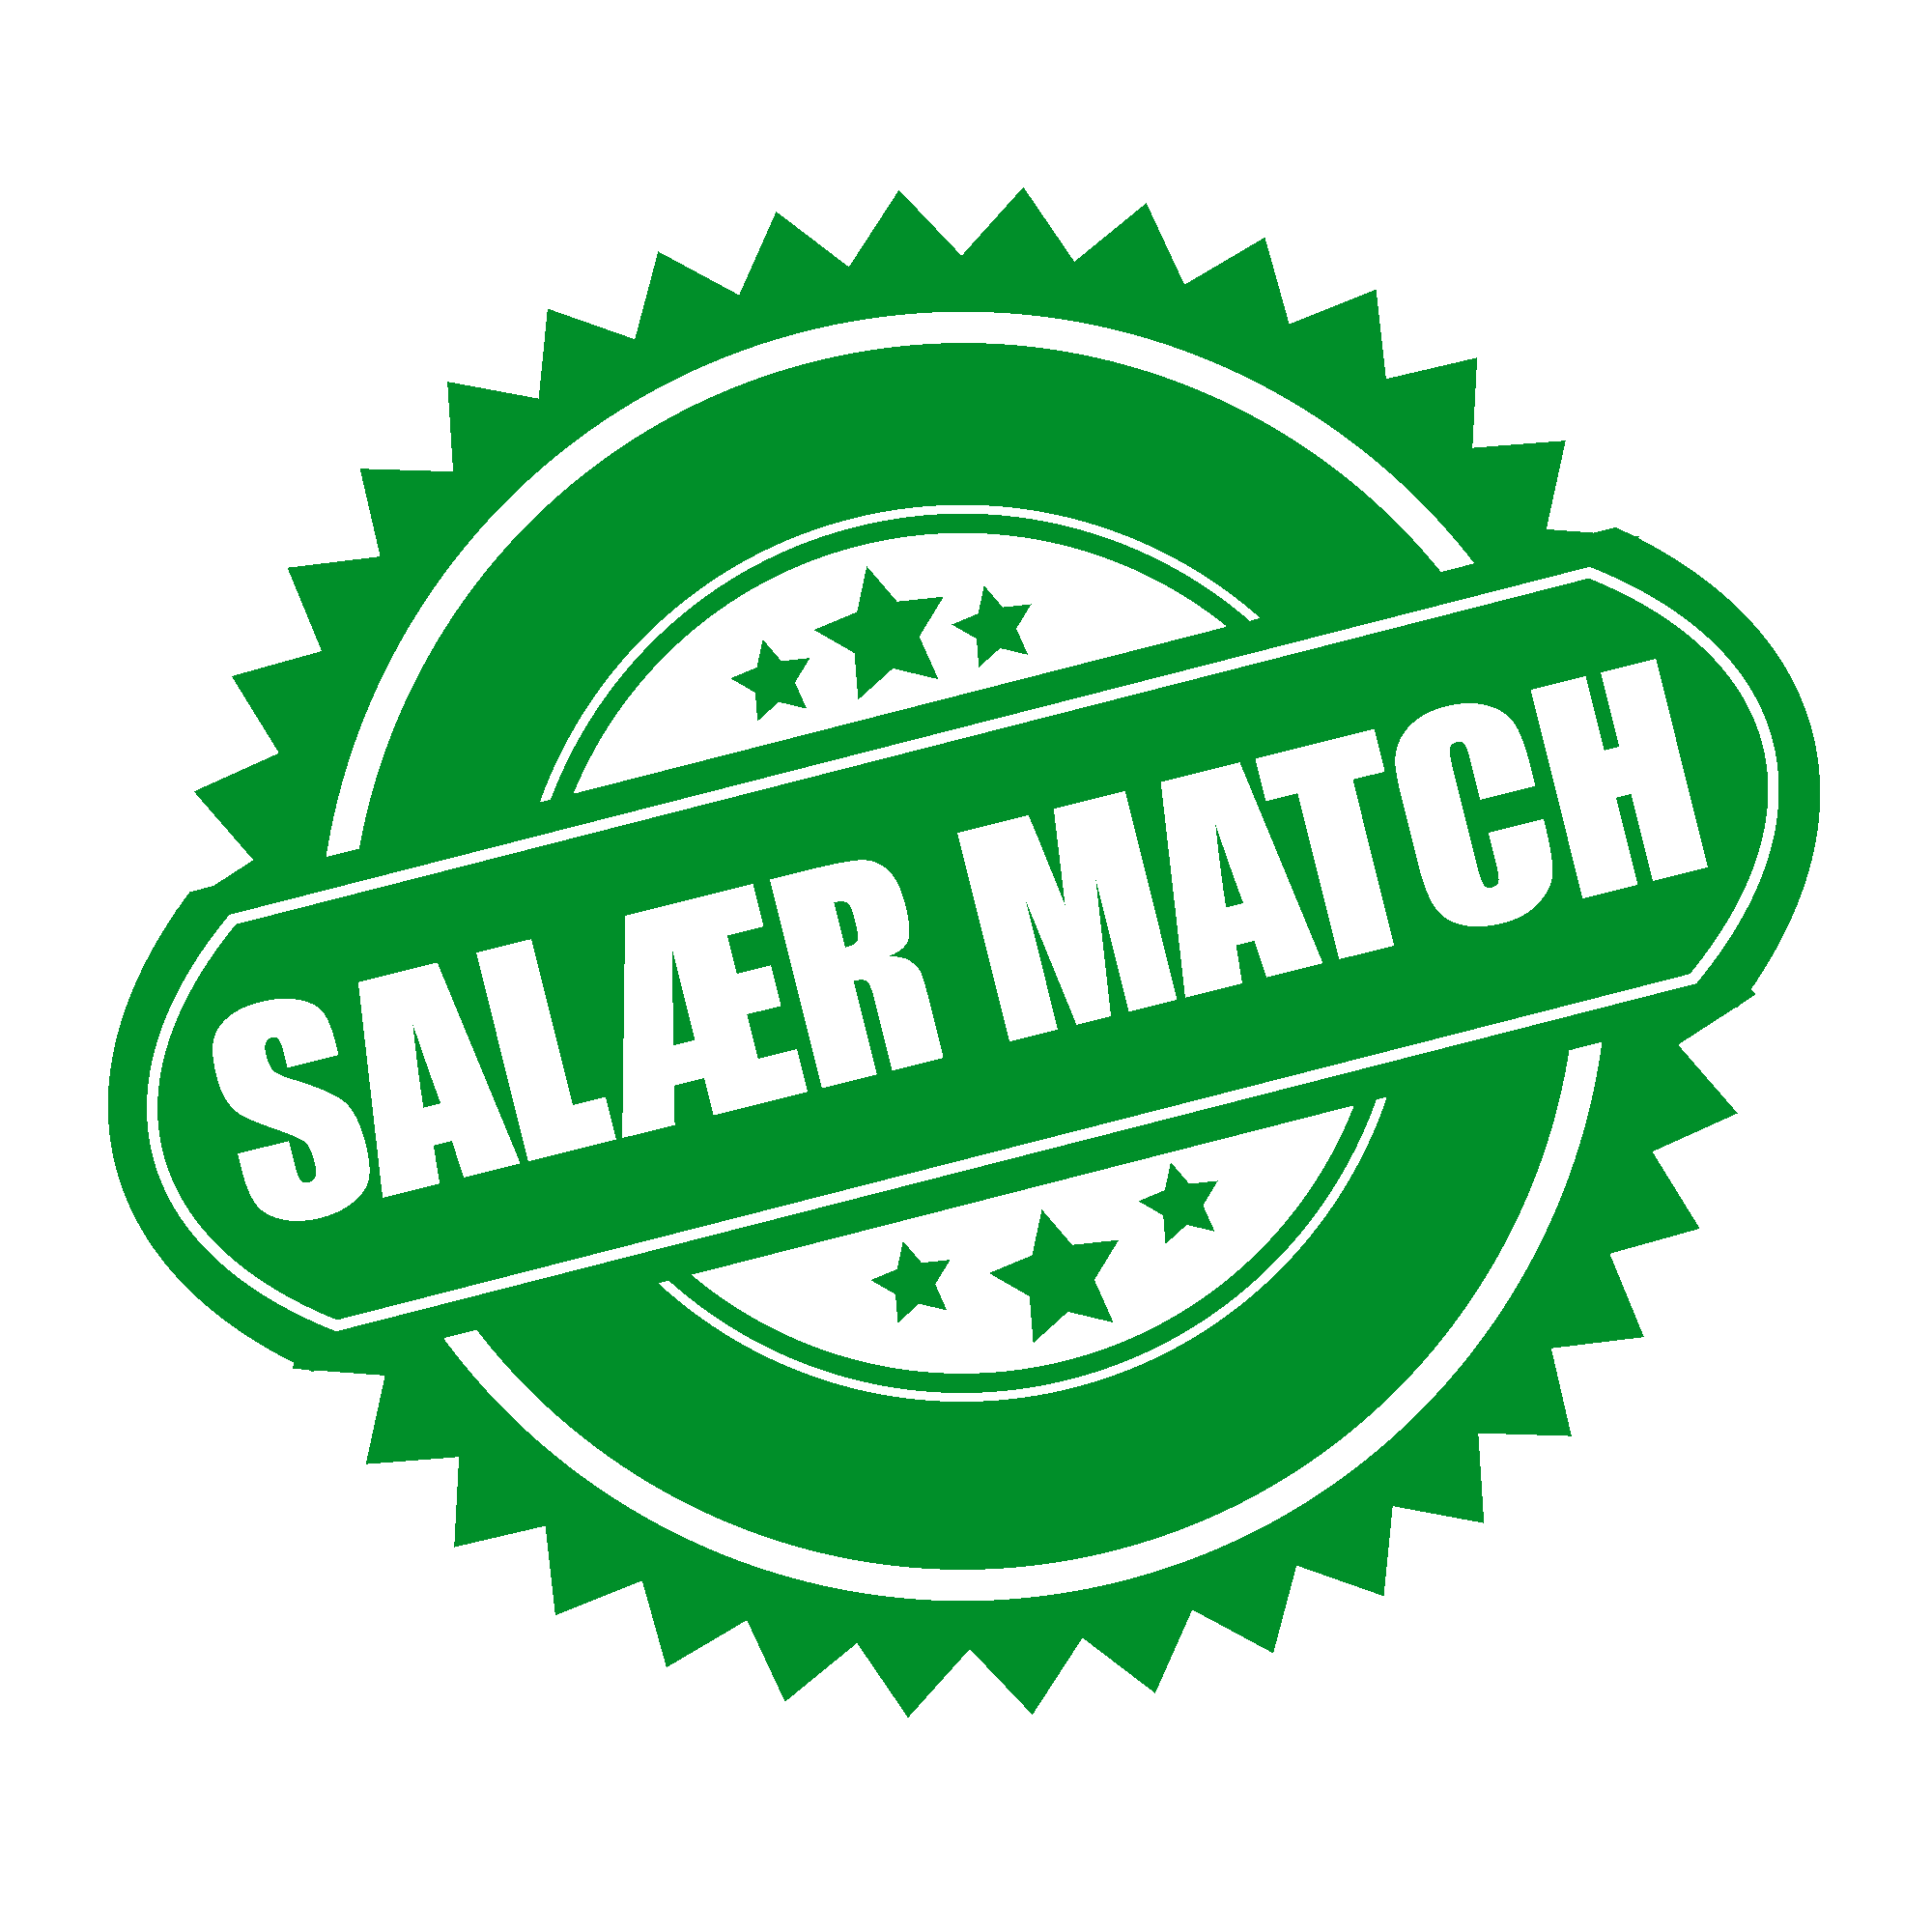 SalaerMatch.PNG [19/02/2021]